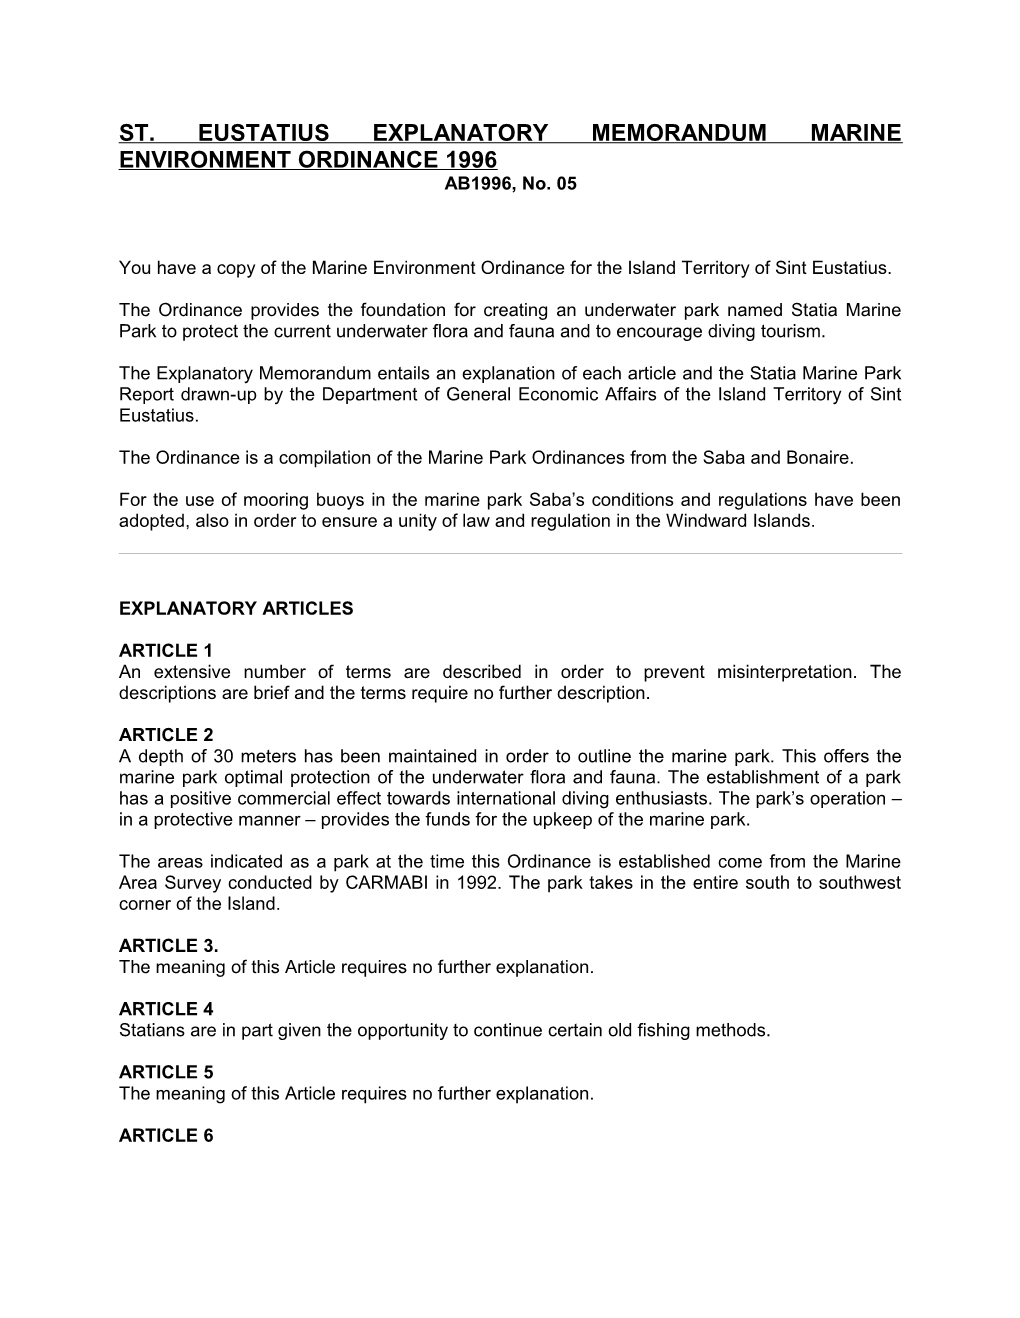 St. Eustatius Explanatory Memorandum Marine Environment Ordinance 1996